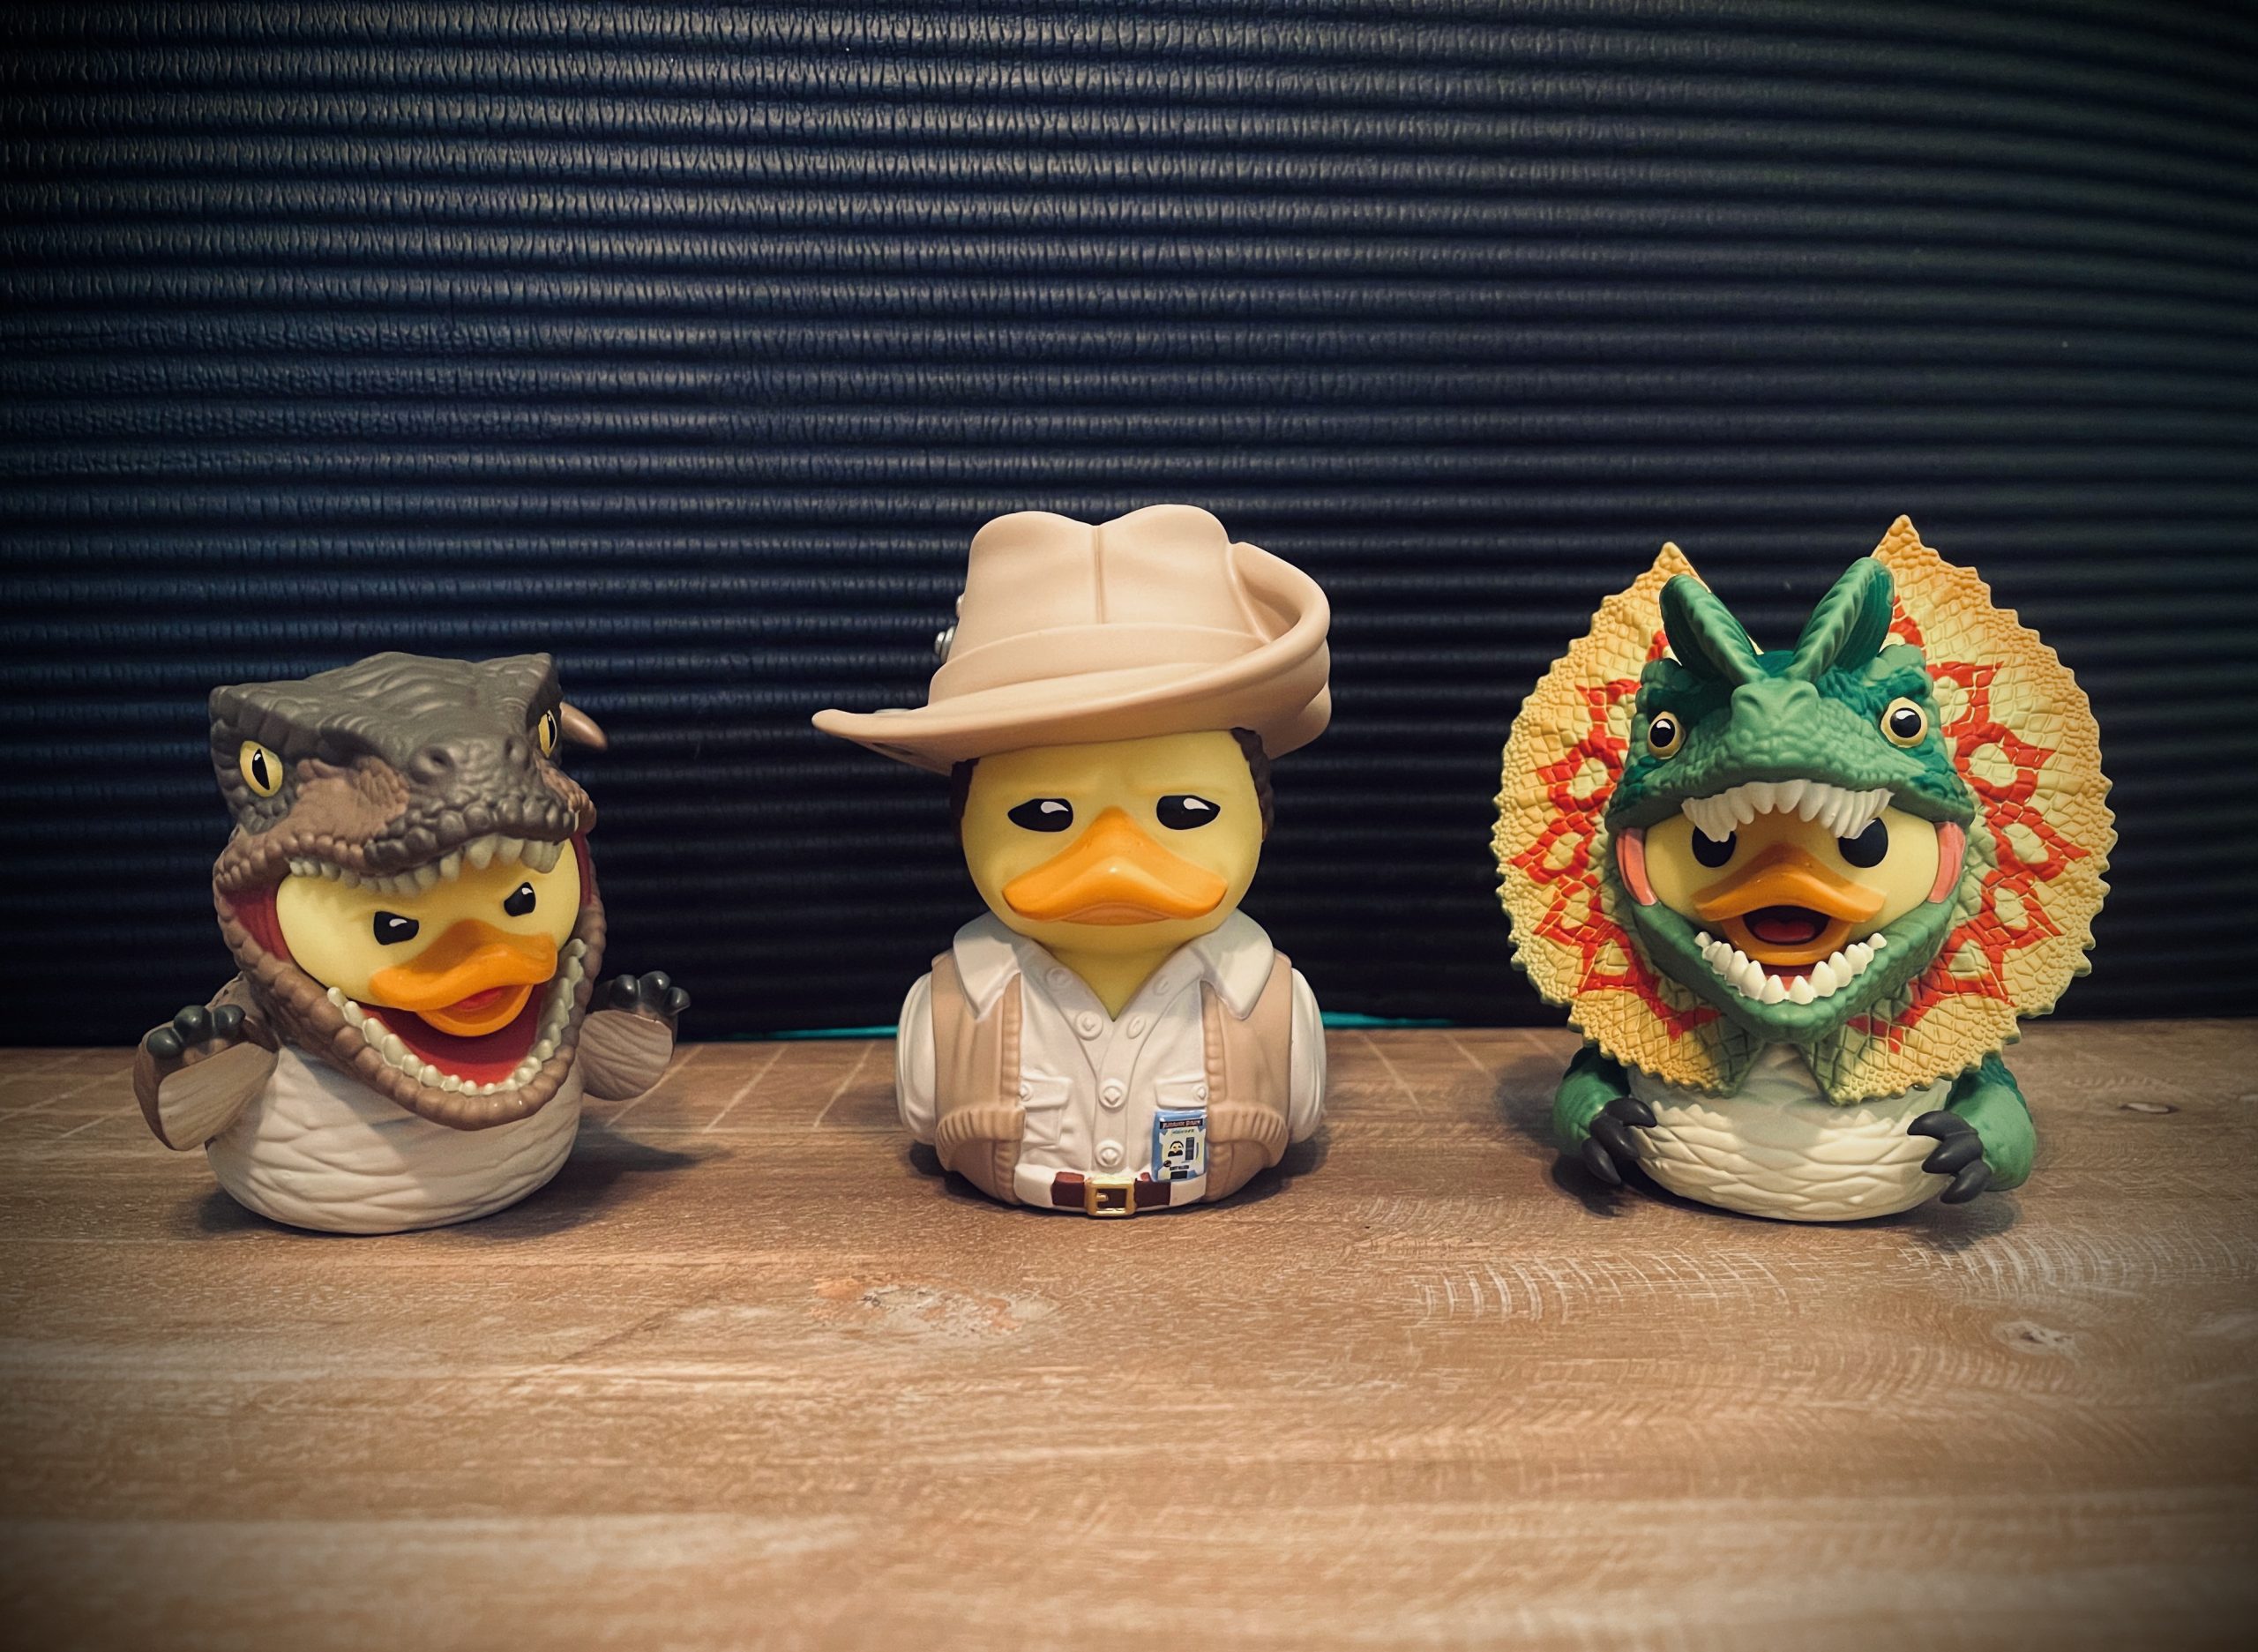 Jurassic Park 30th Anniversary TUBBZ Ducks Have Arrived!